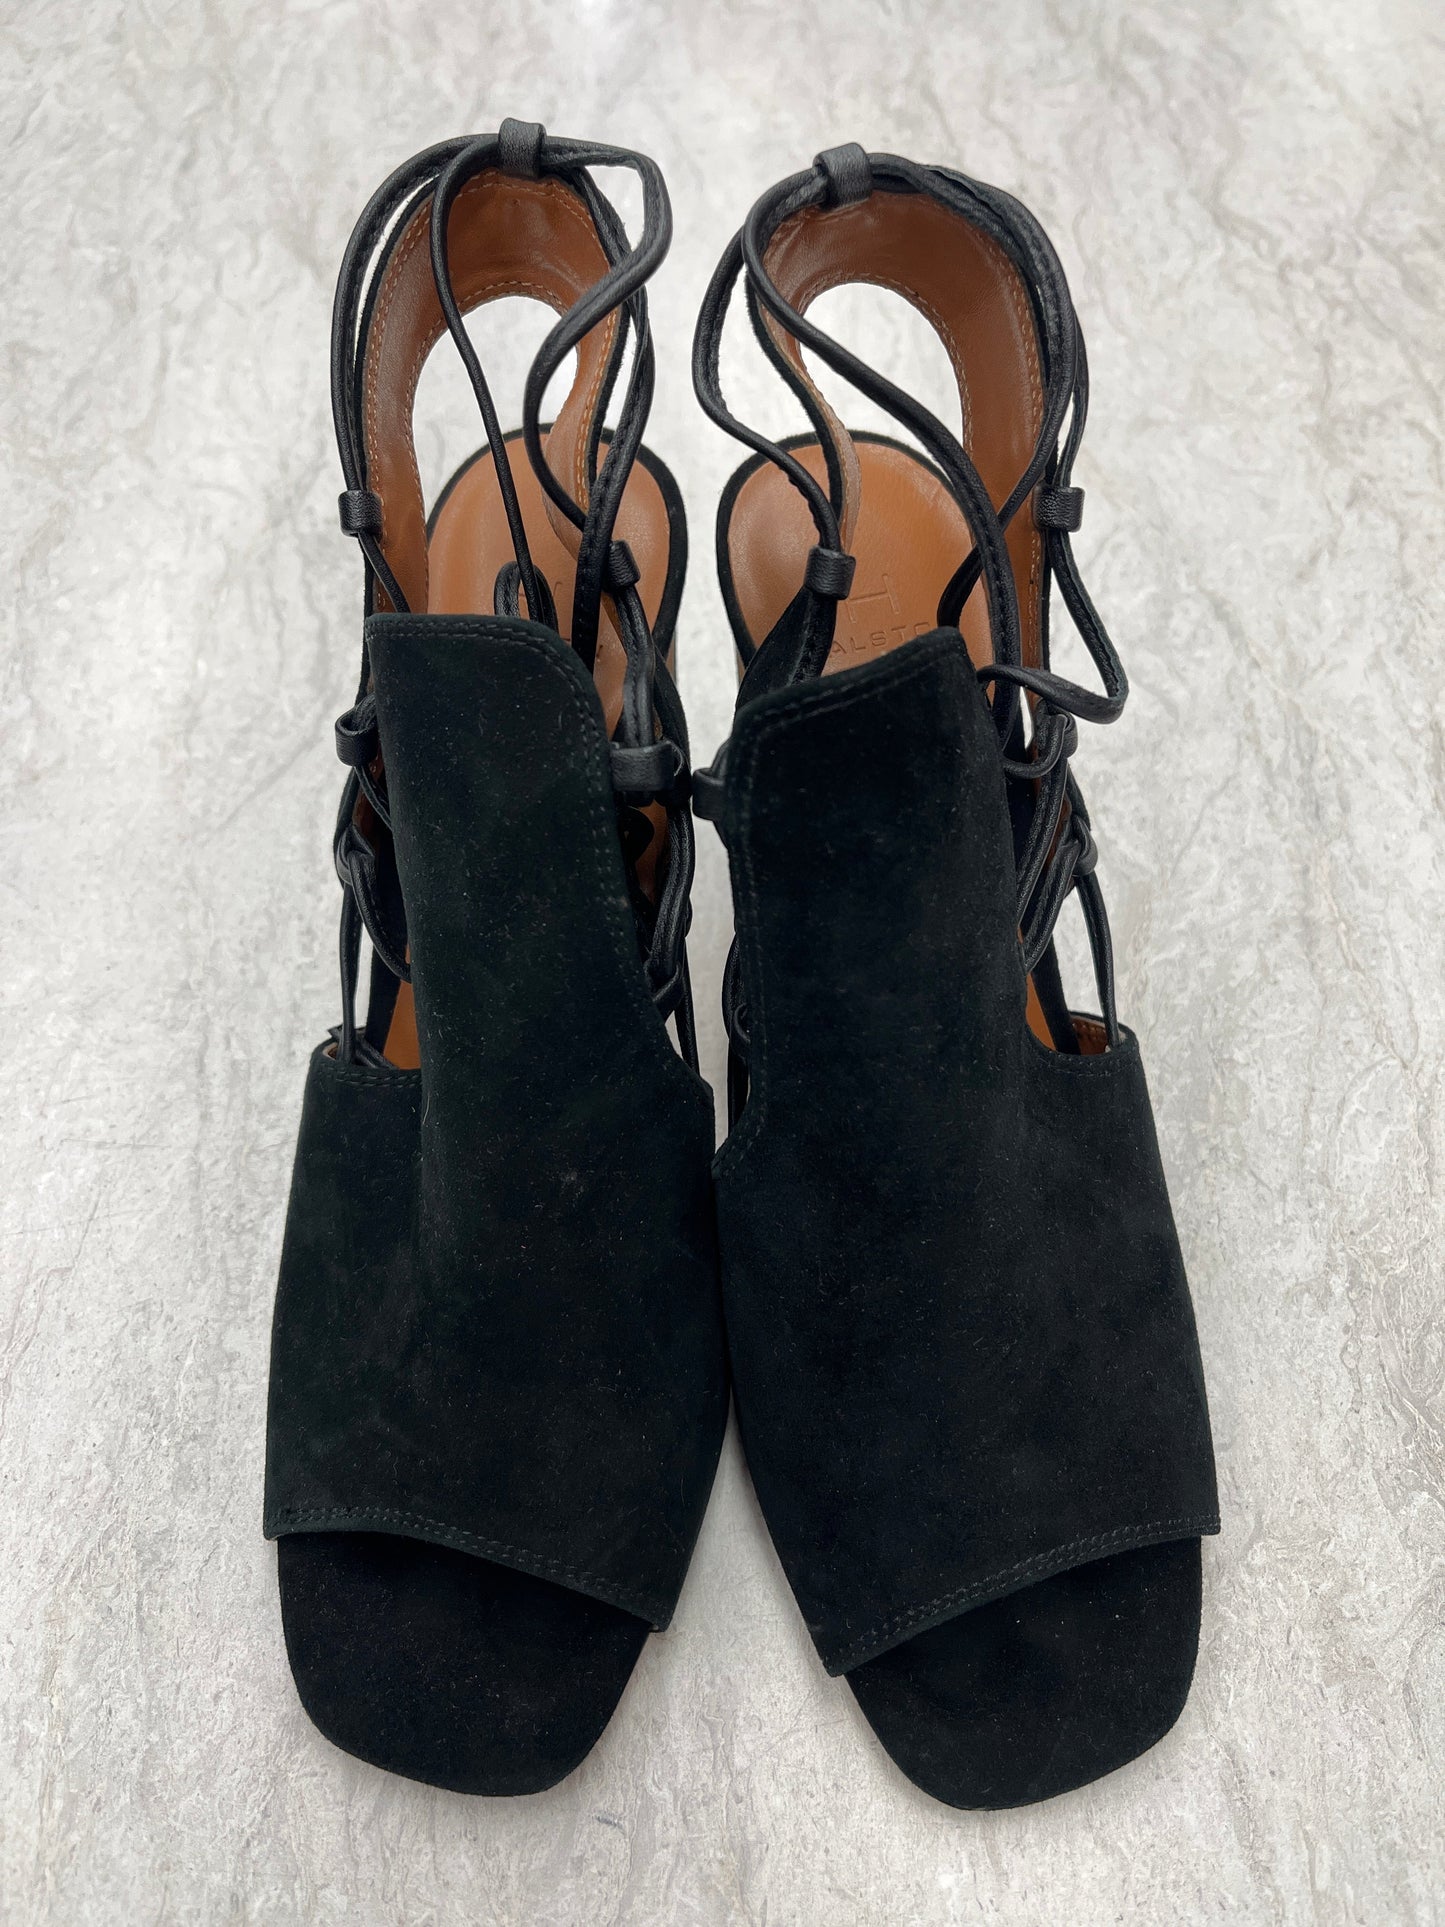 Black Shoes Heels Block Halston, Size 8